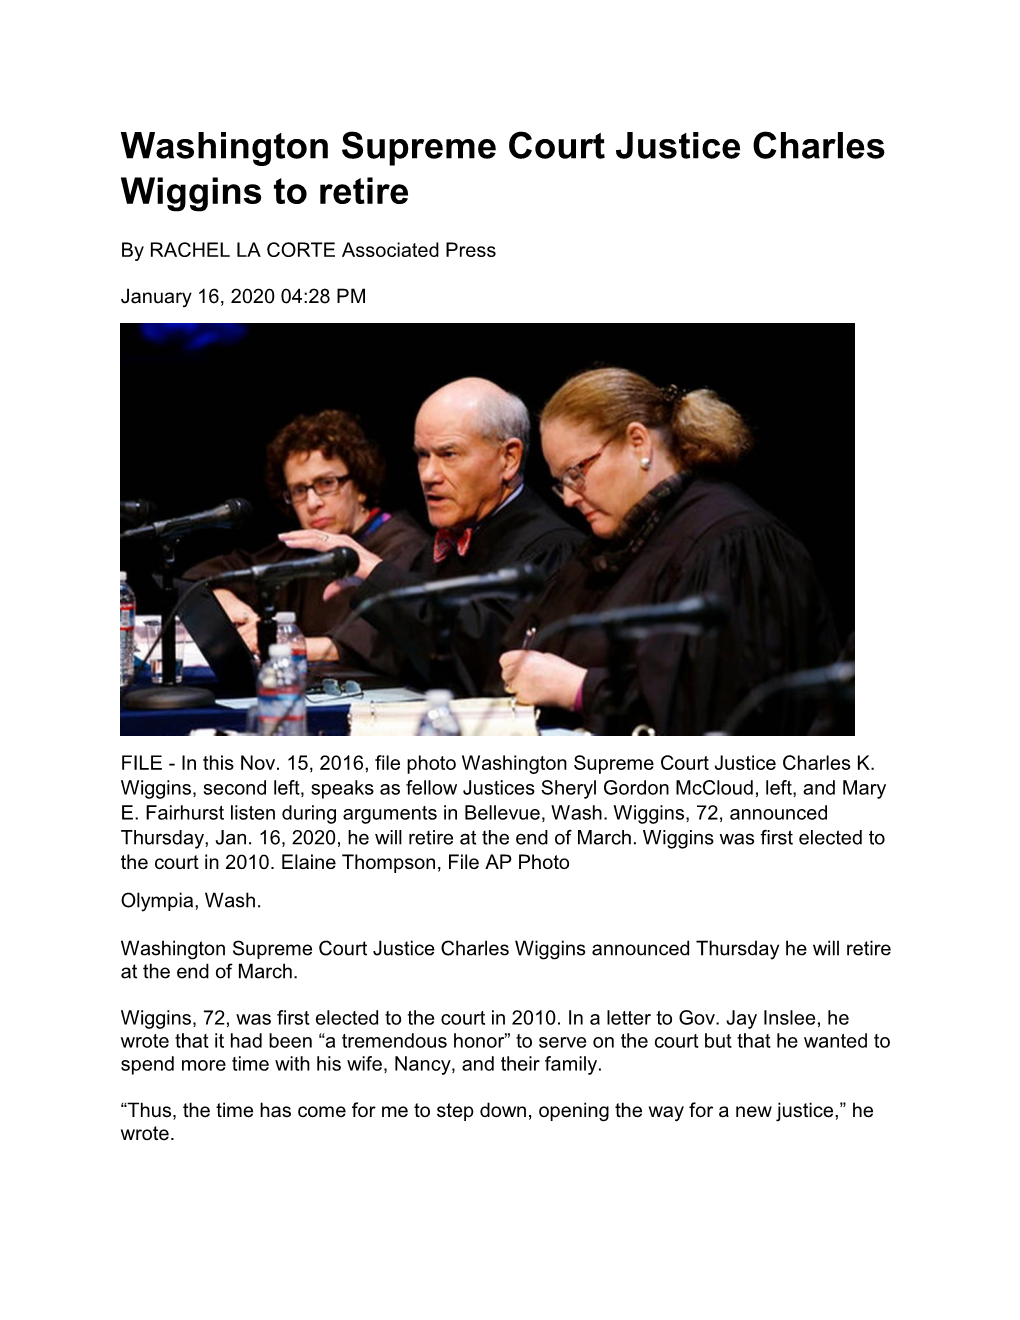 Washington Supreme Court Justice Charles Wiggins to Retire